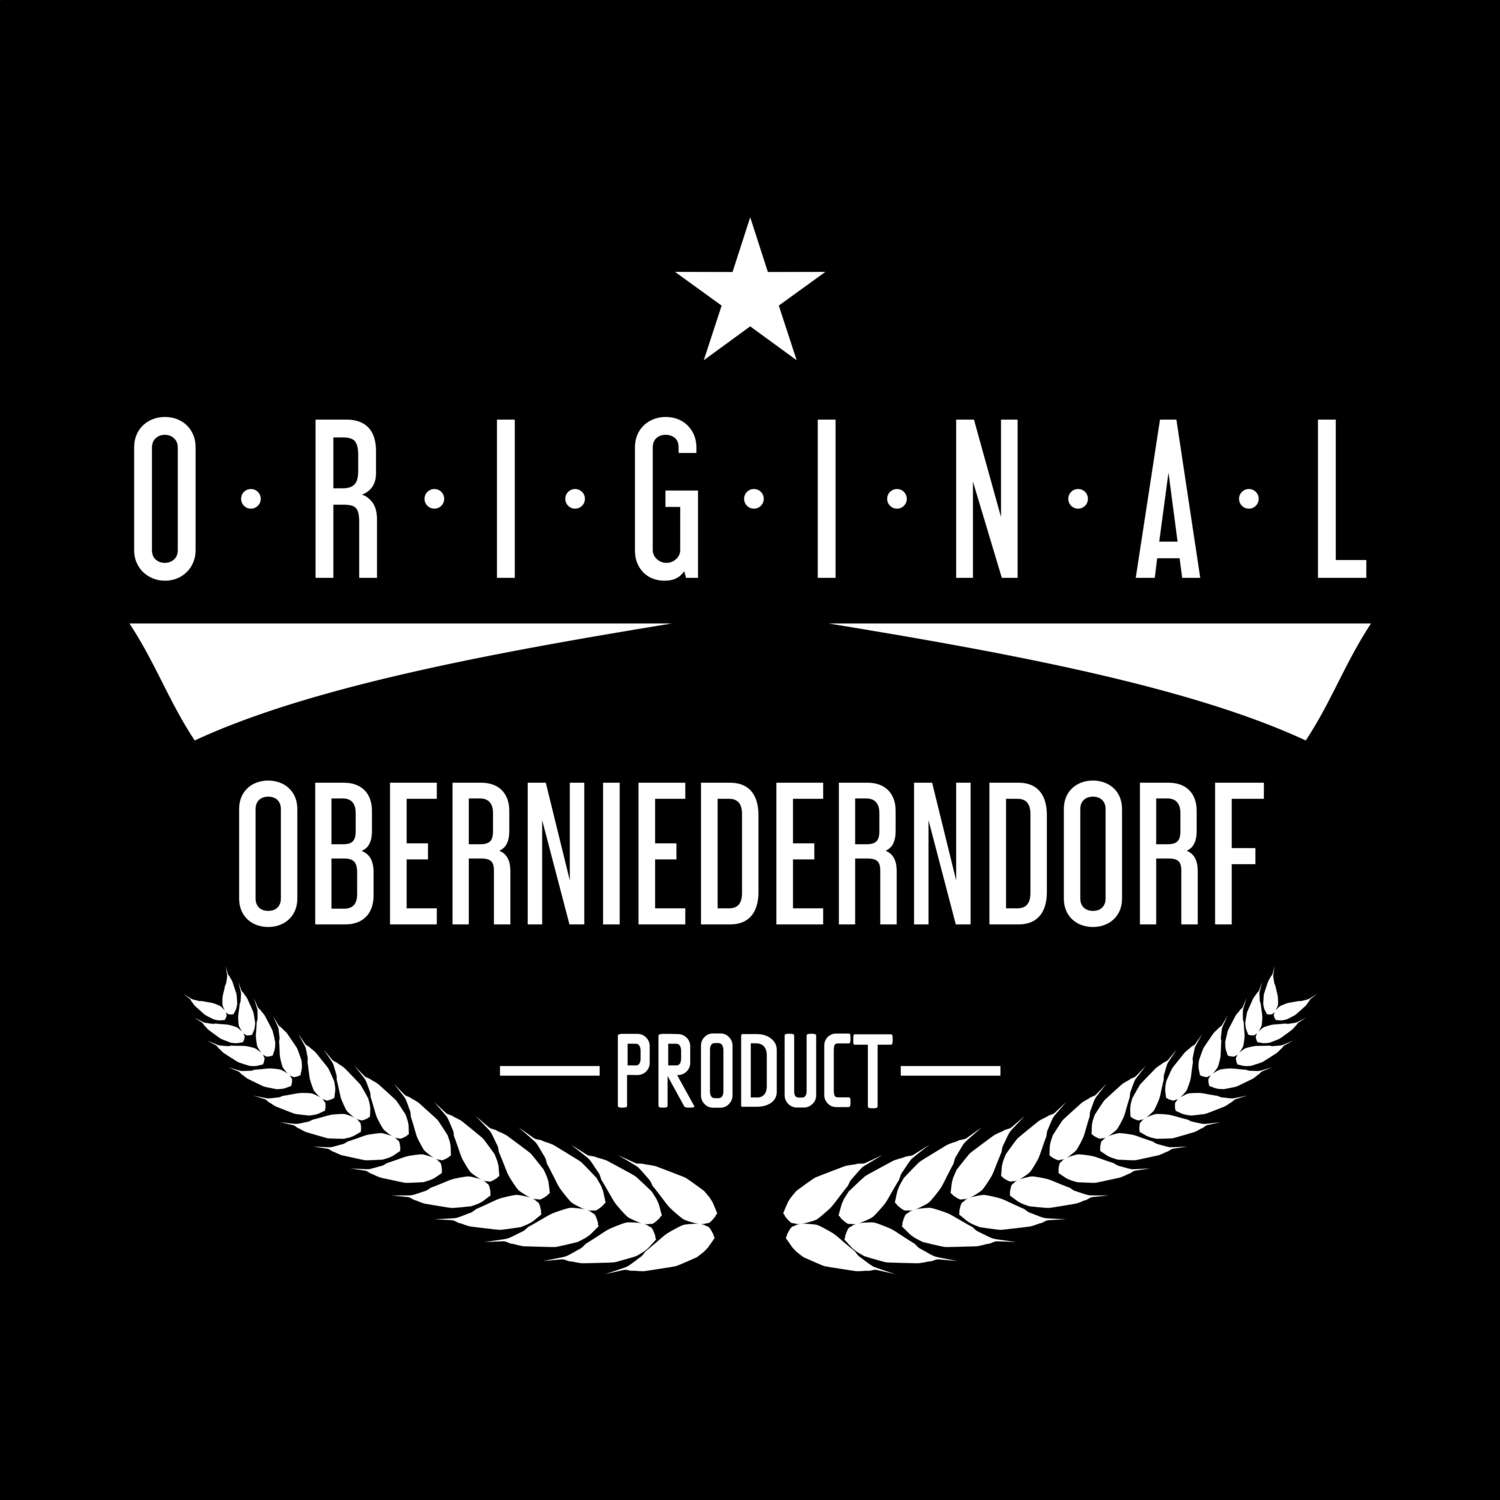 Oberniederndorf T-Shirt »Original Product«